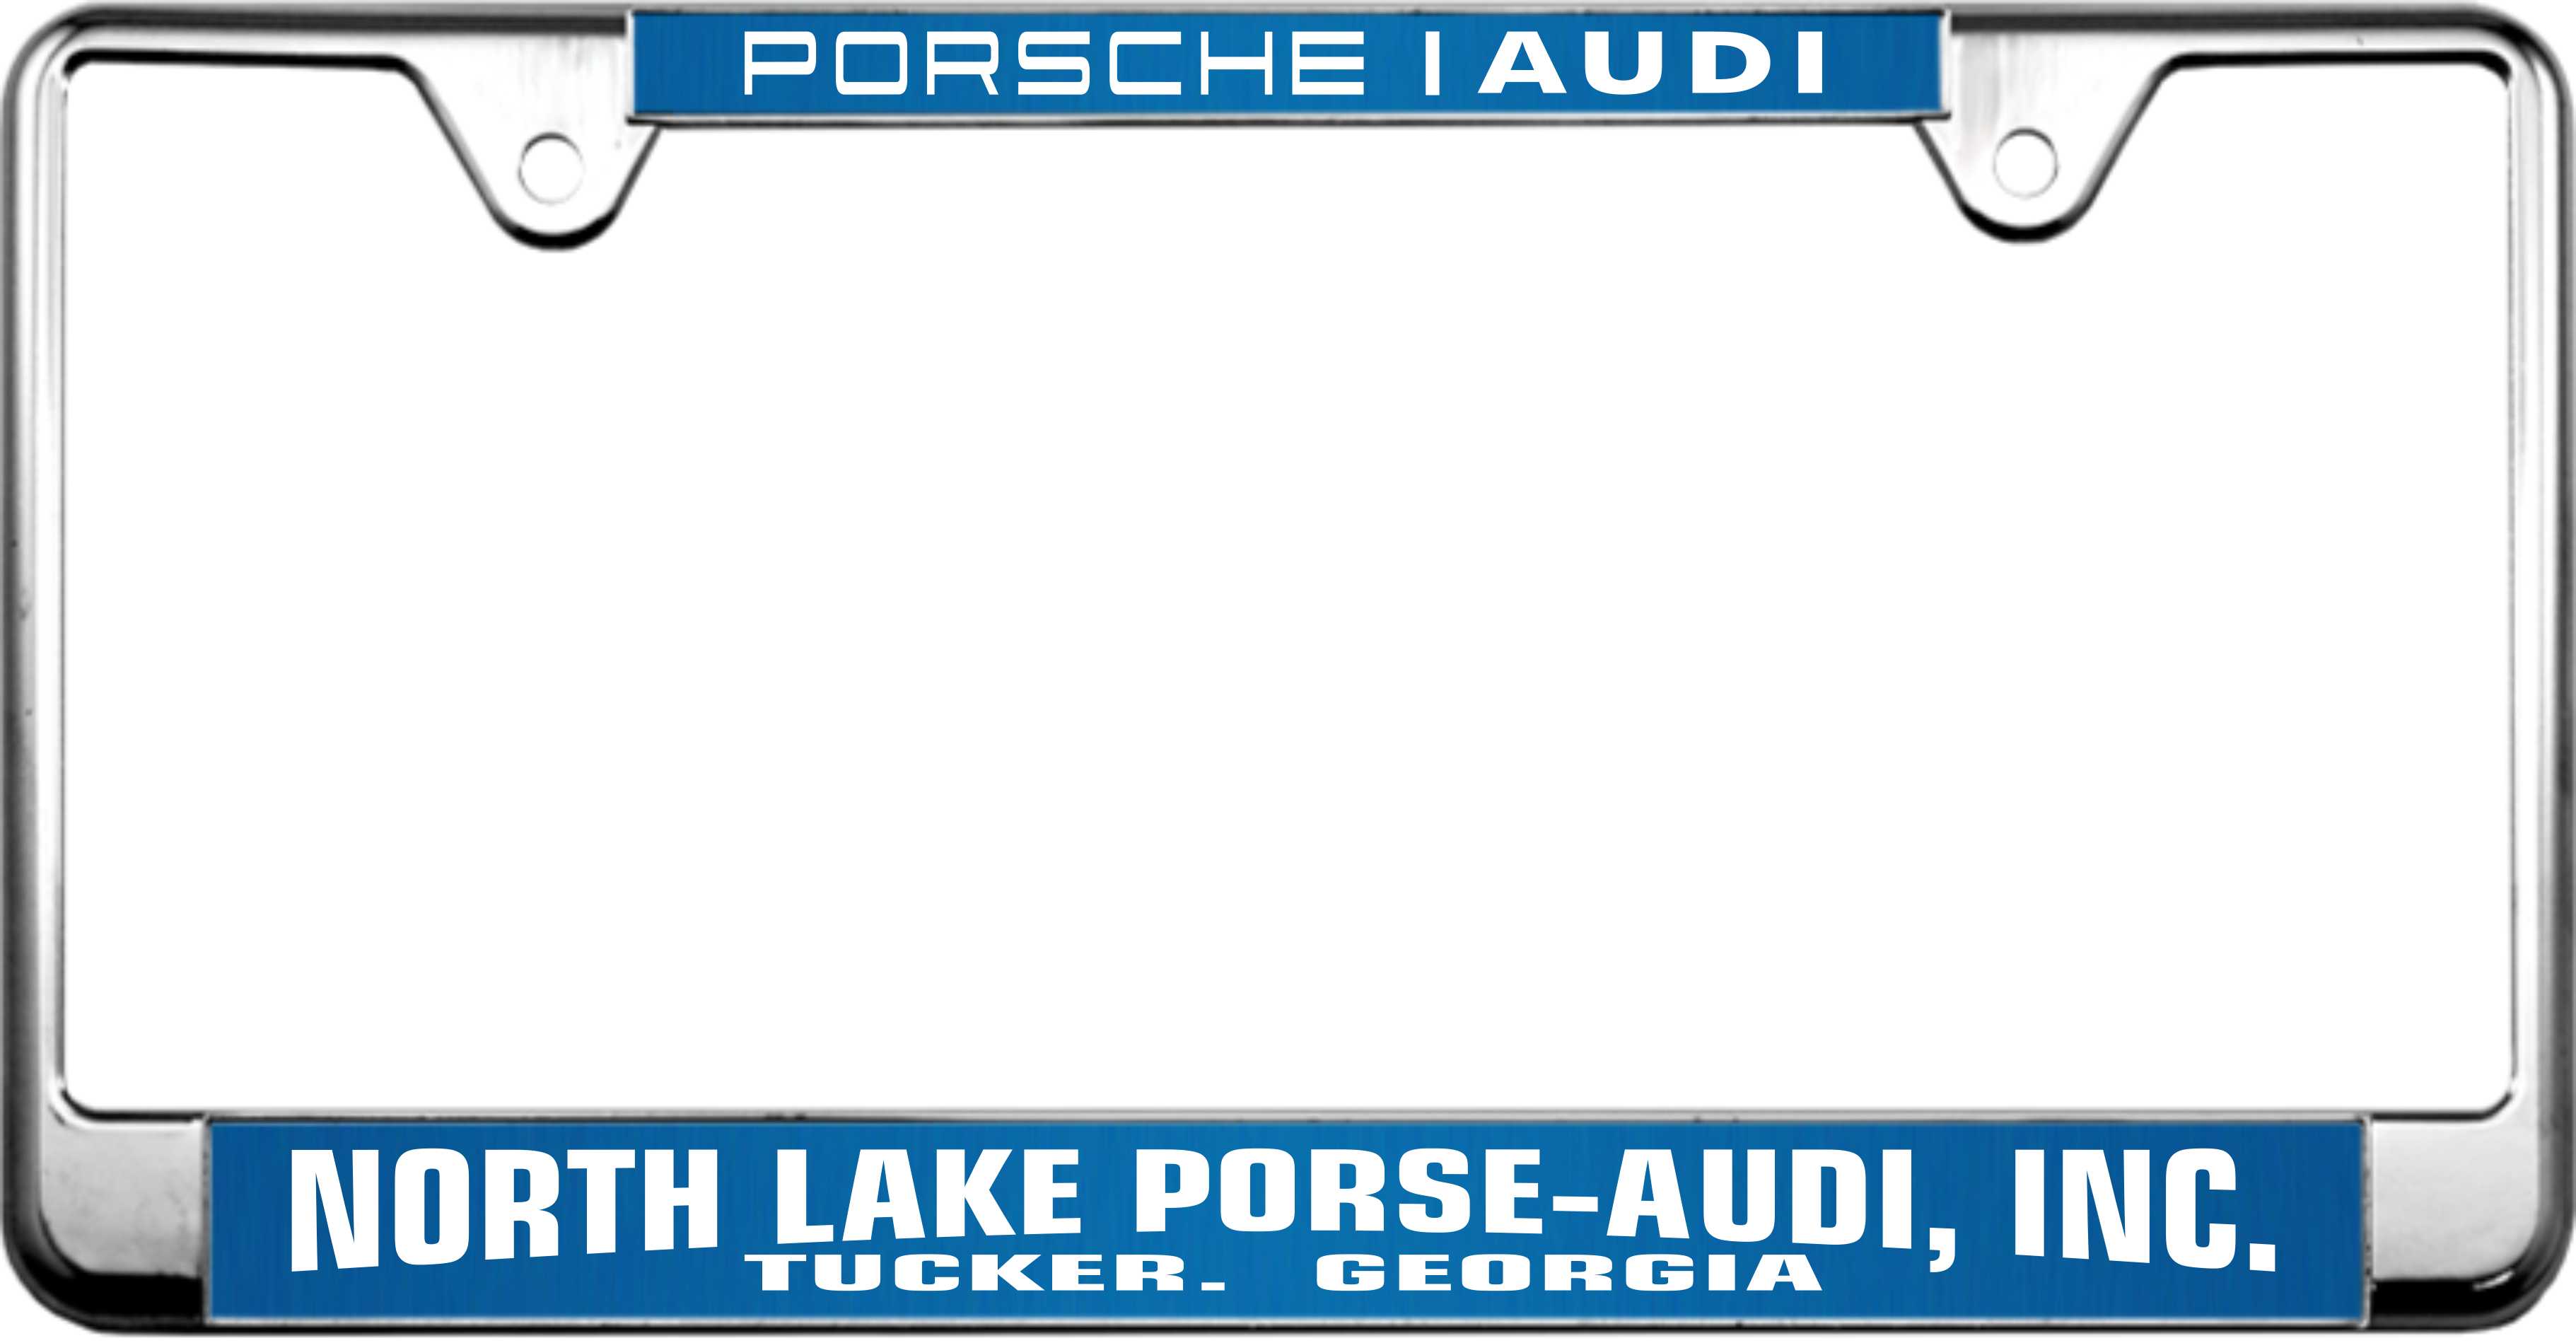 Porsche Audi Lot of 25 Custom License Plate Frames